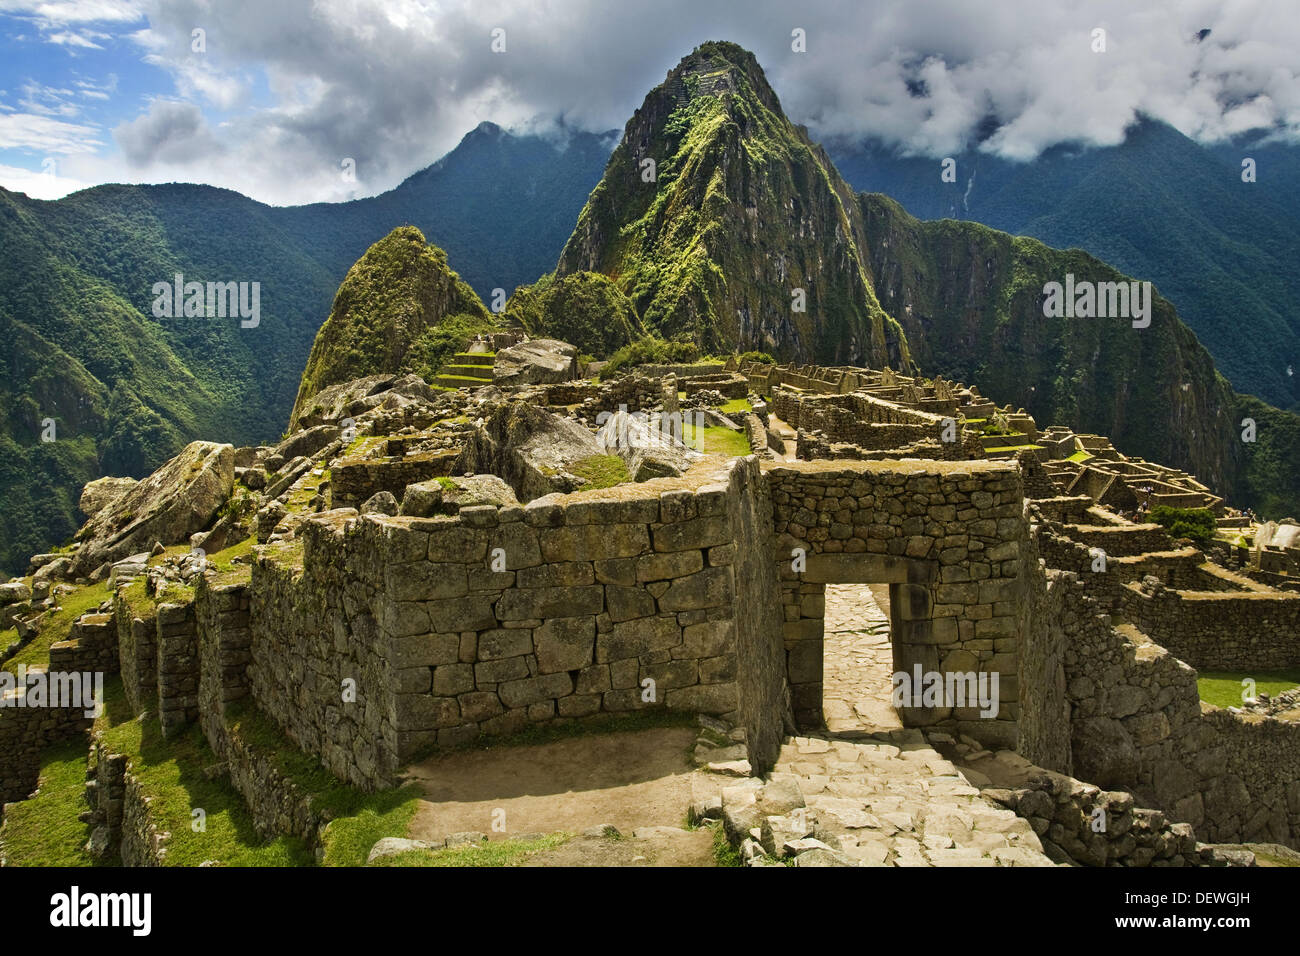 machu picchu la ciudad sagrada del imperio inca cusco perú